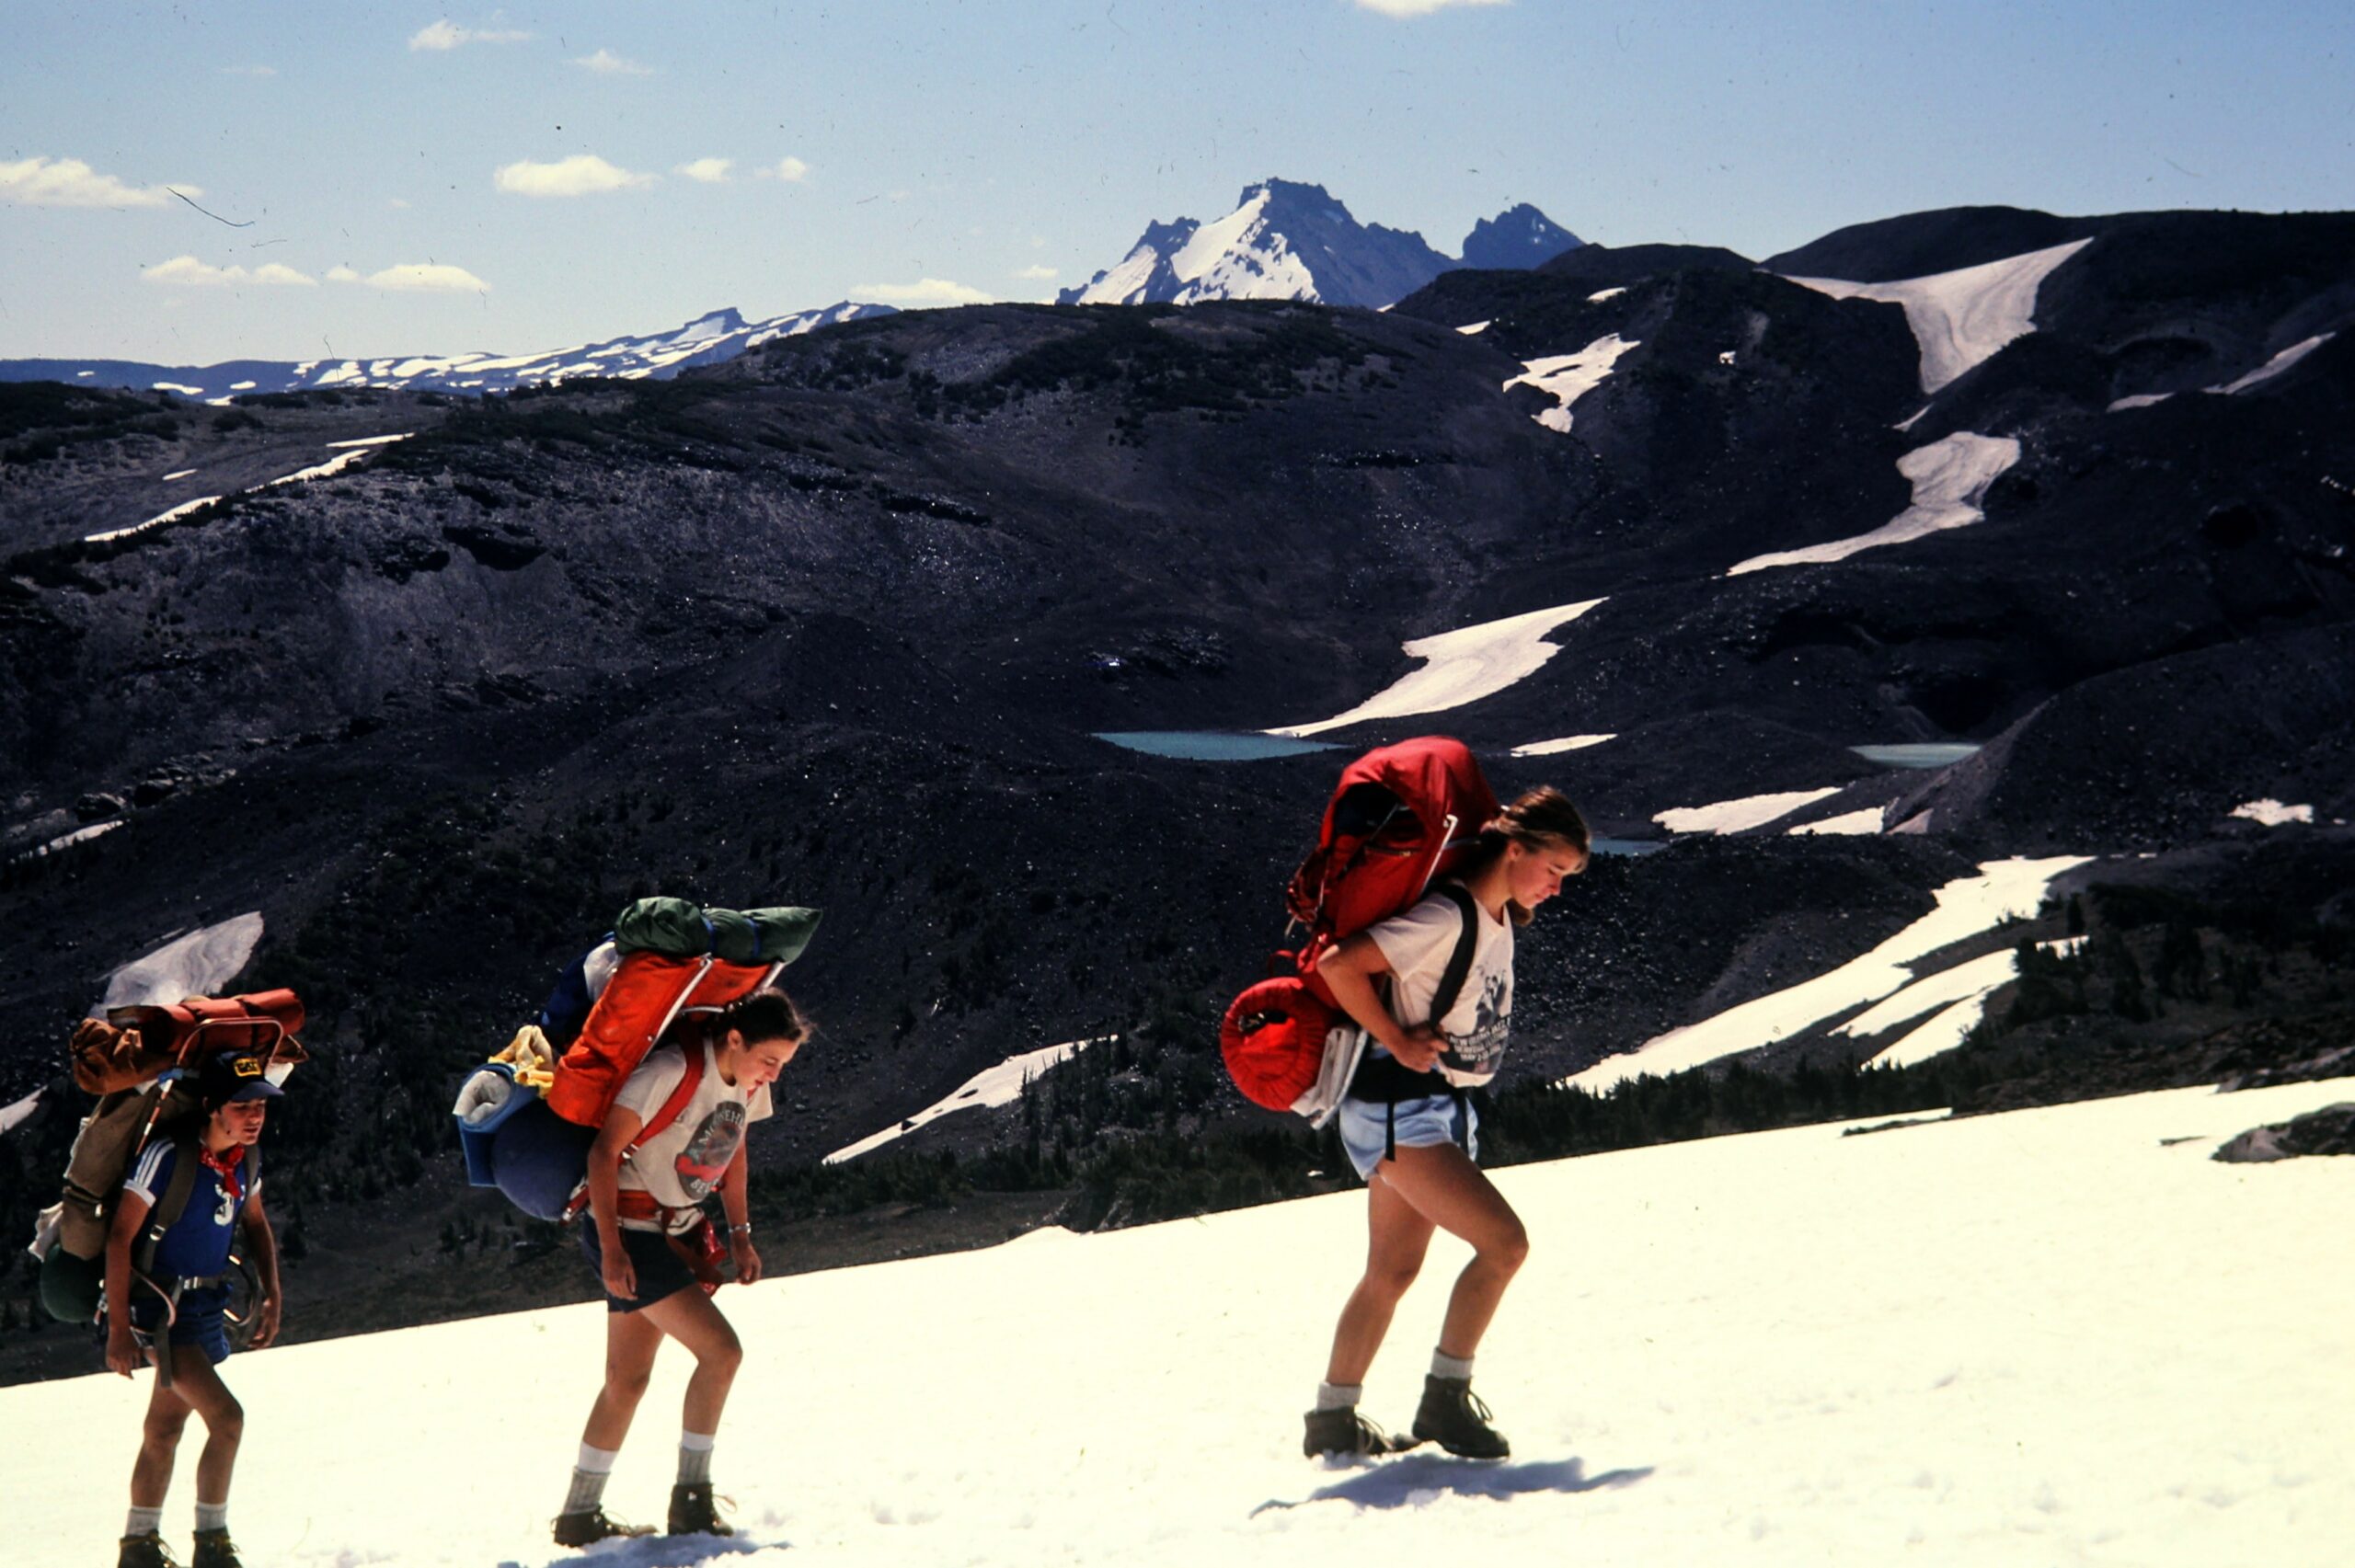 1981 Backpacking up a Glacier